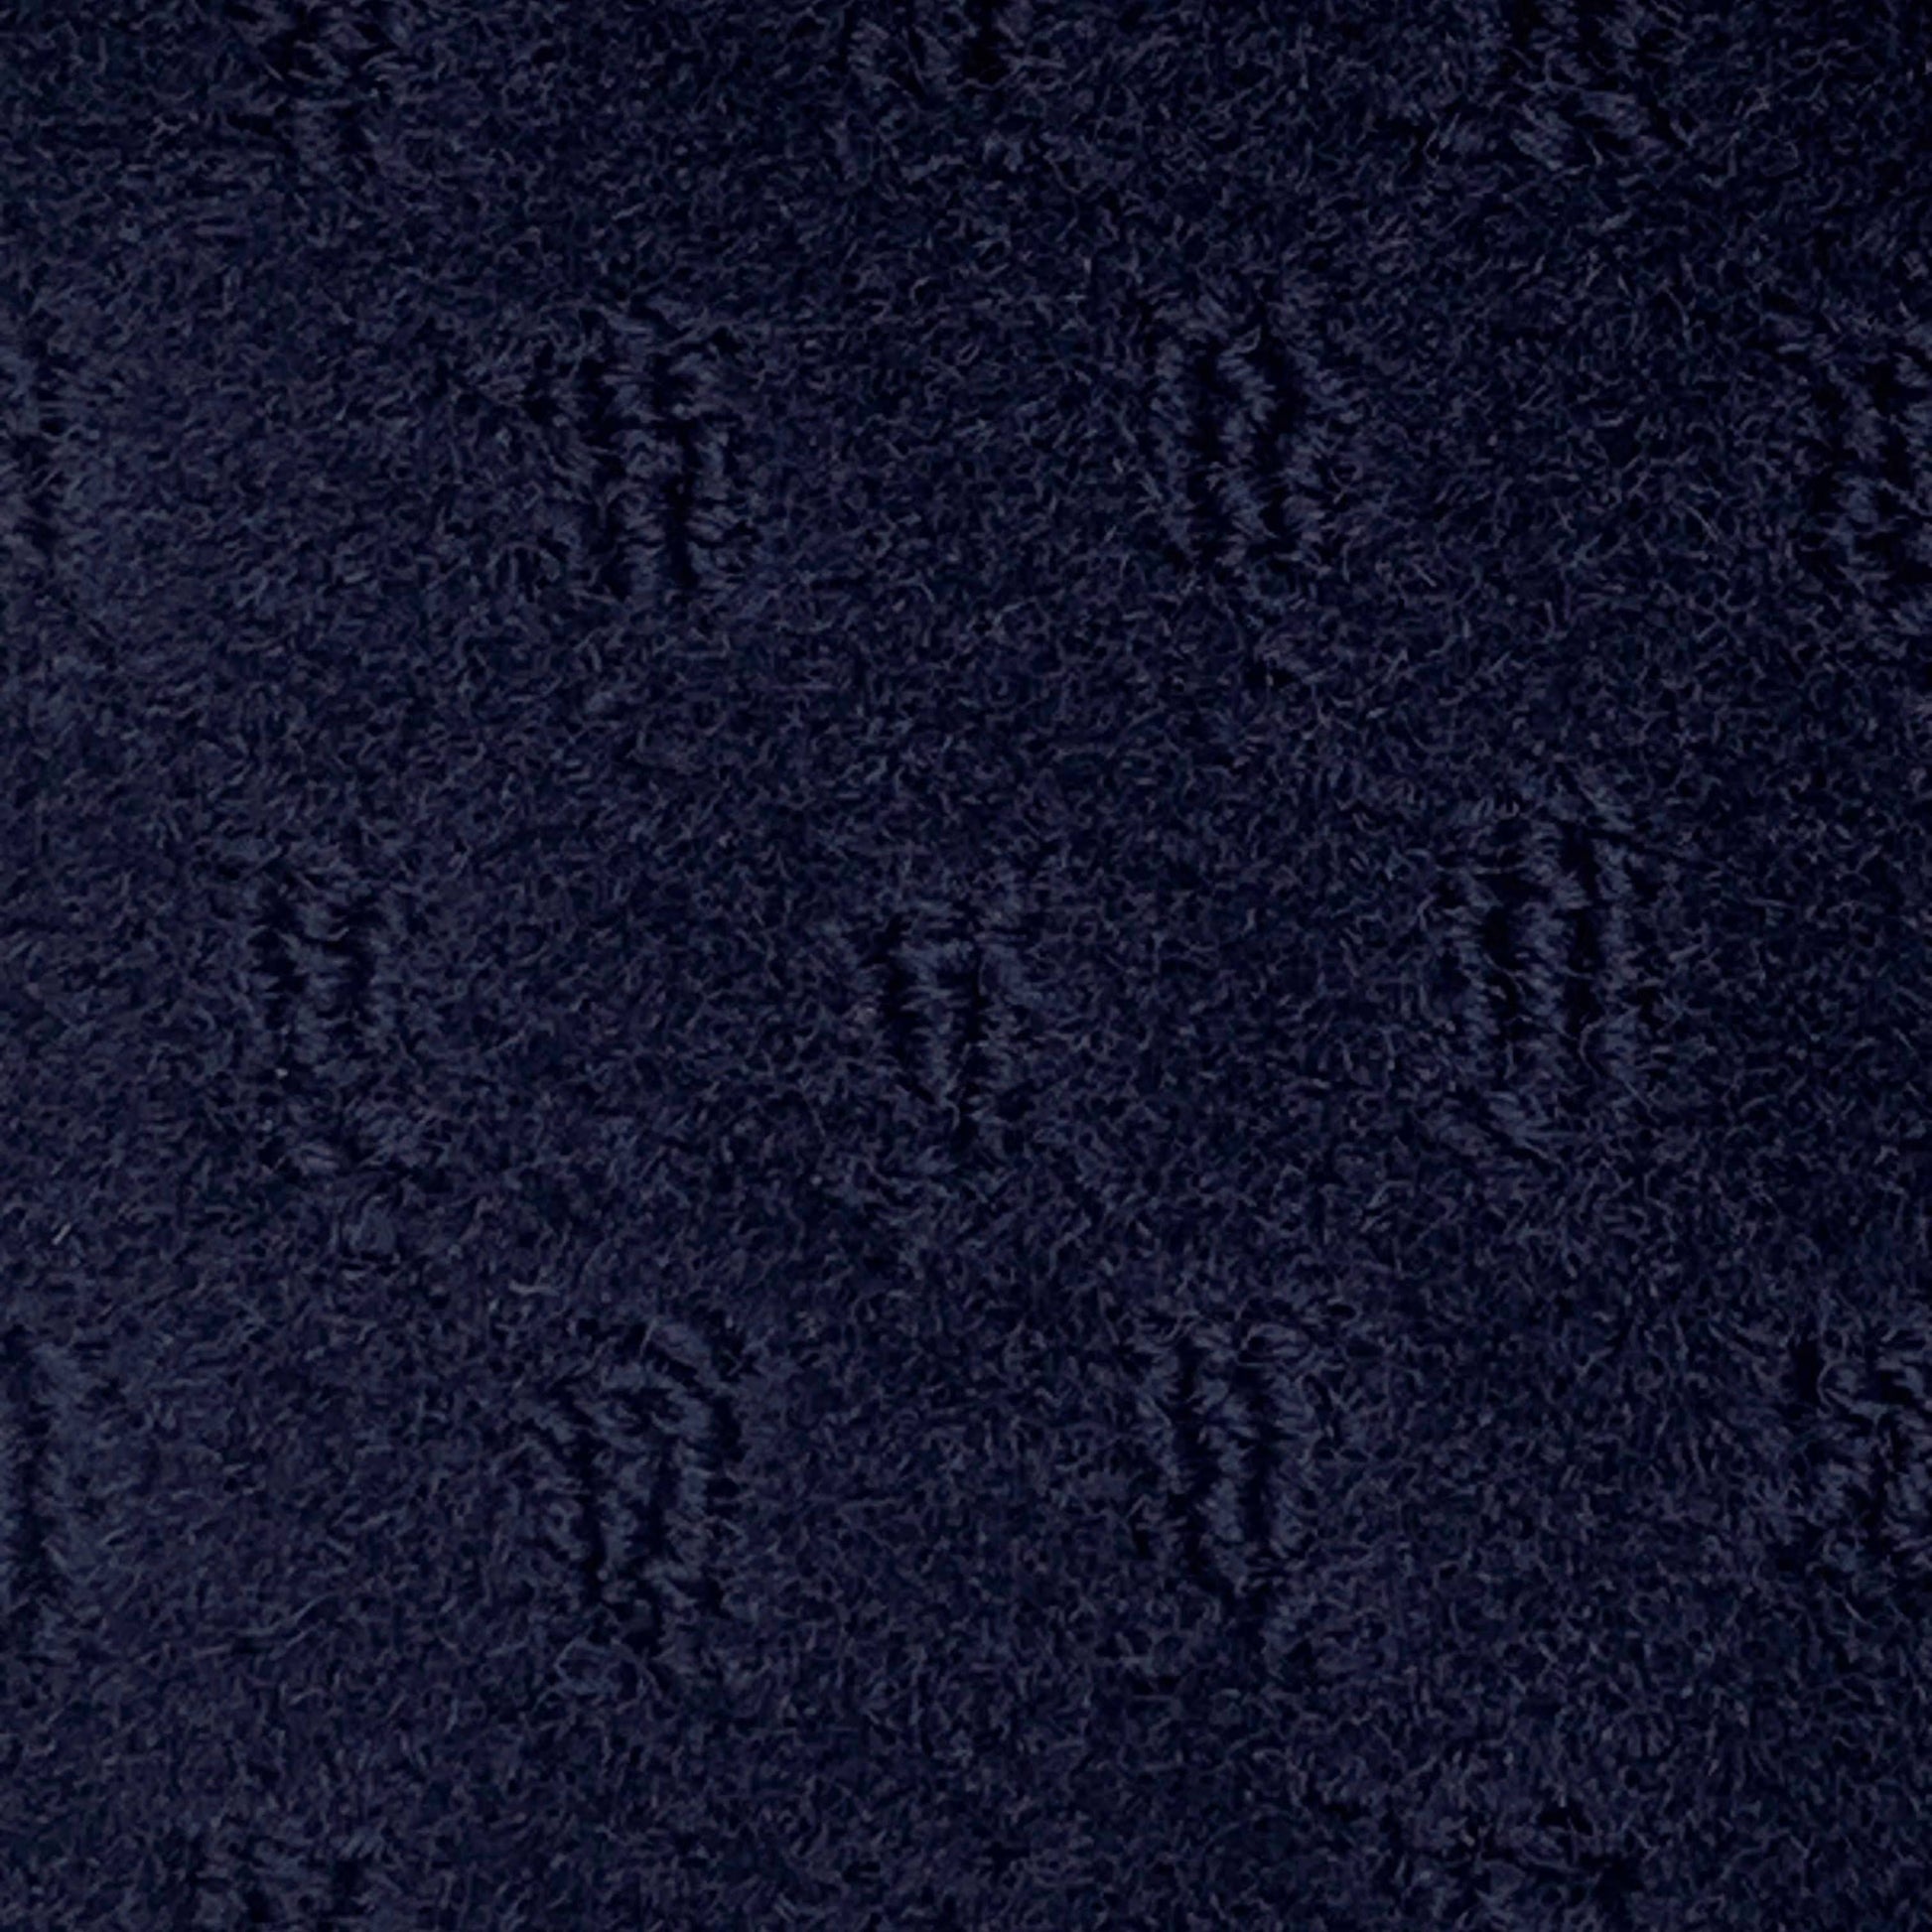 Blue textured boat carpet 